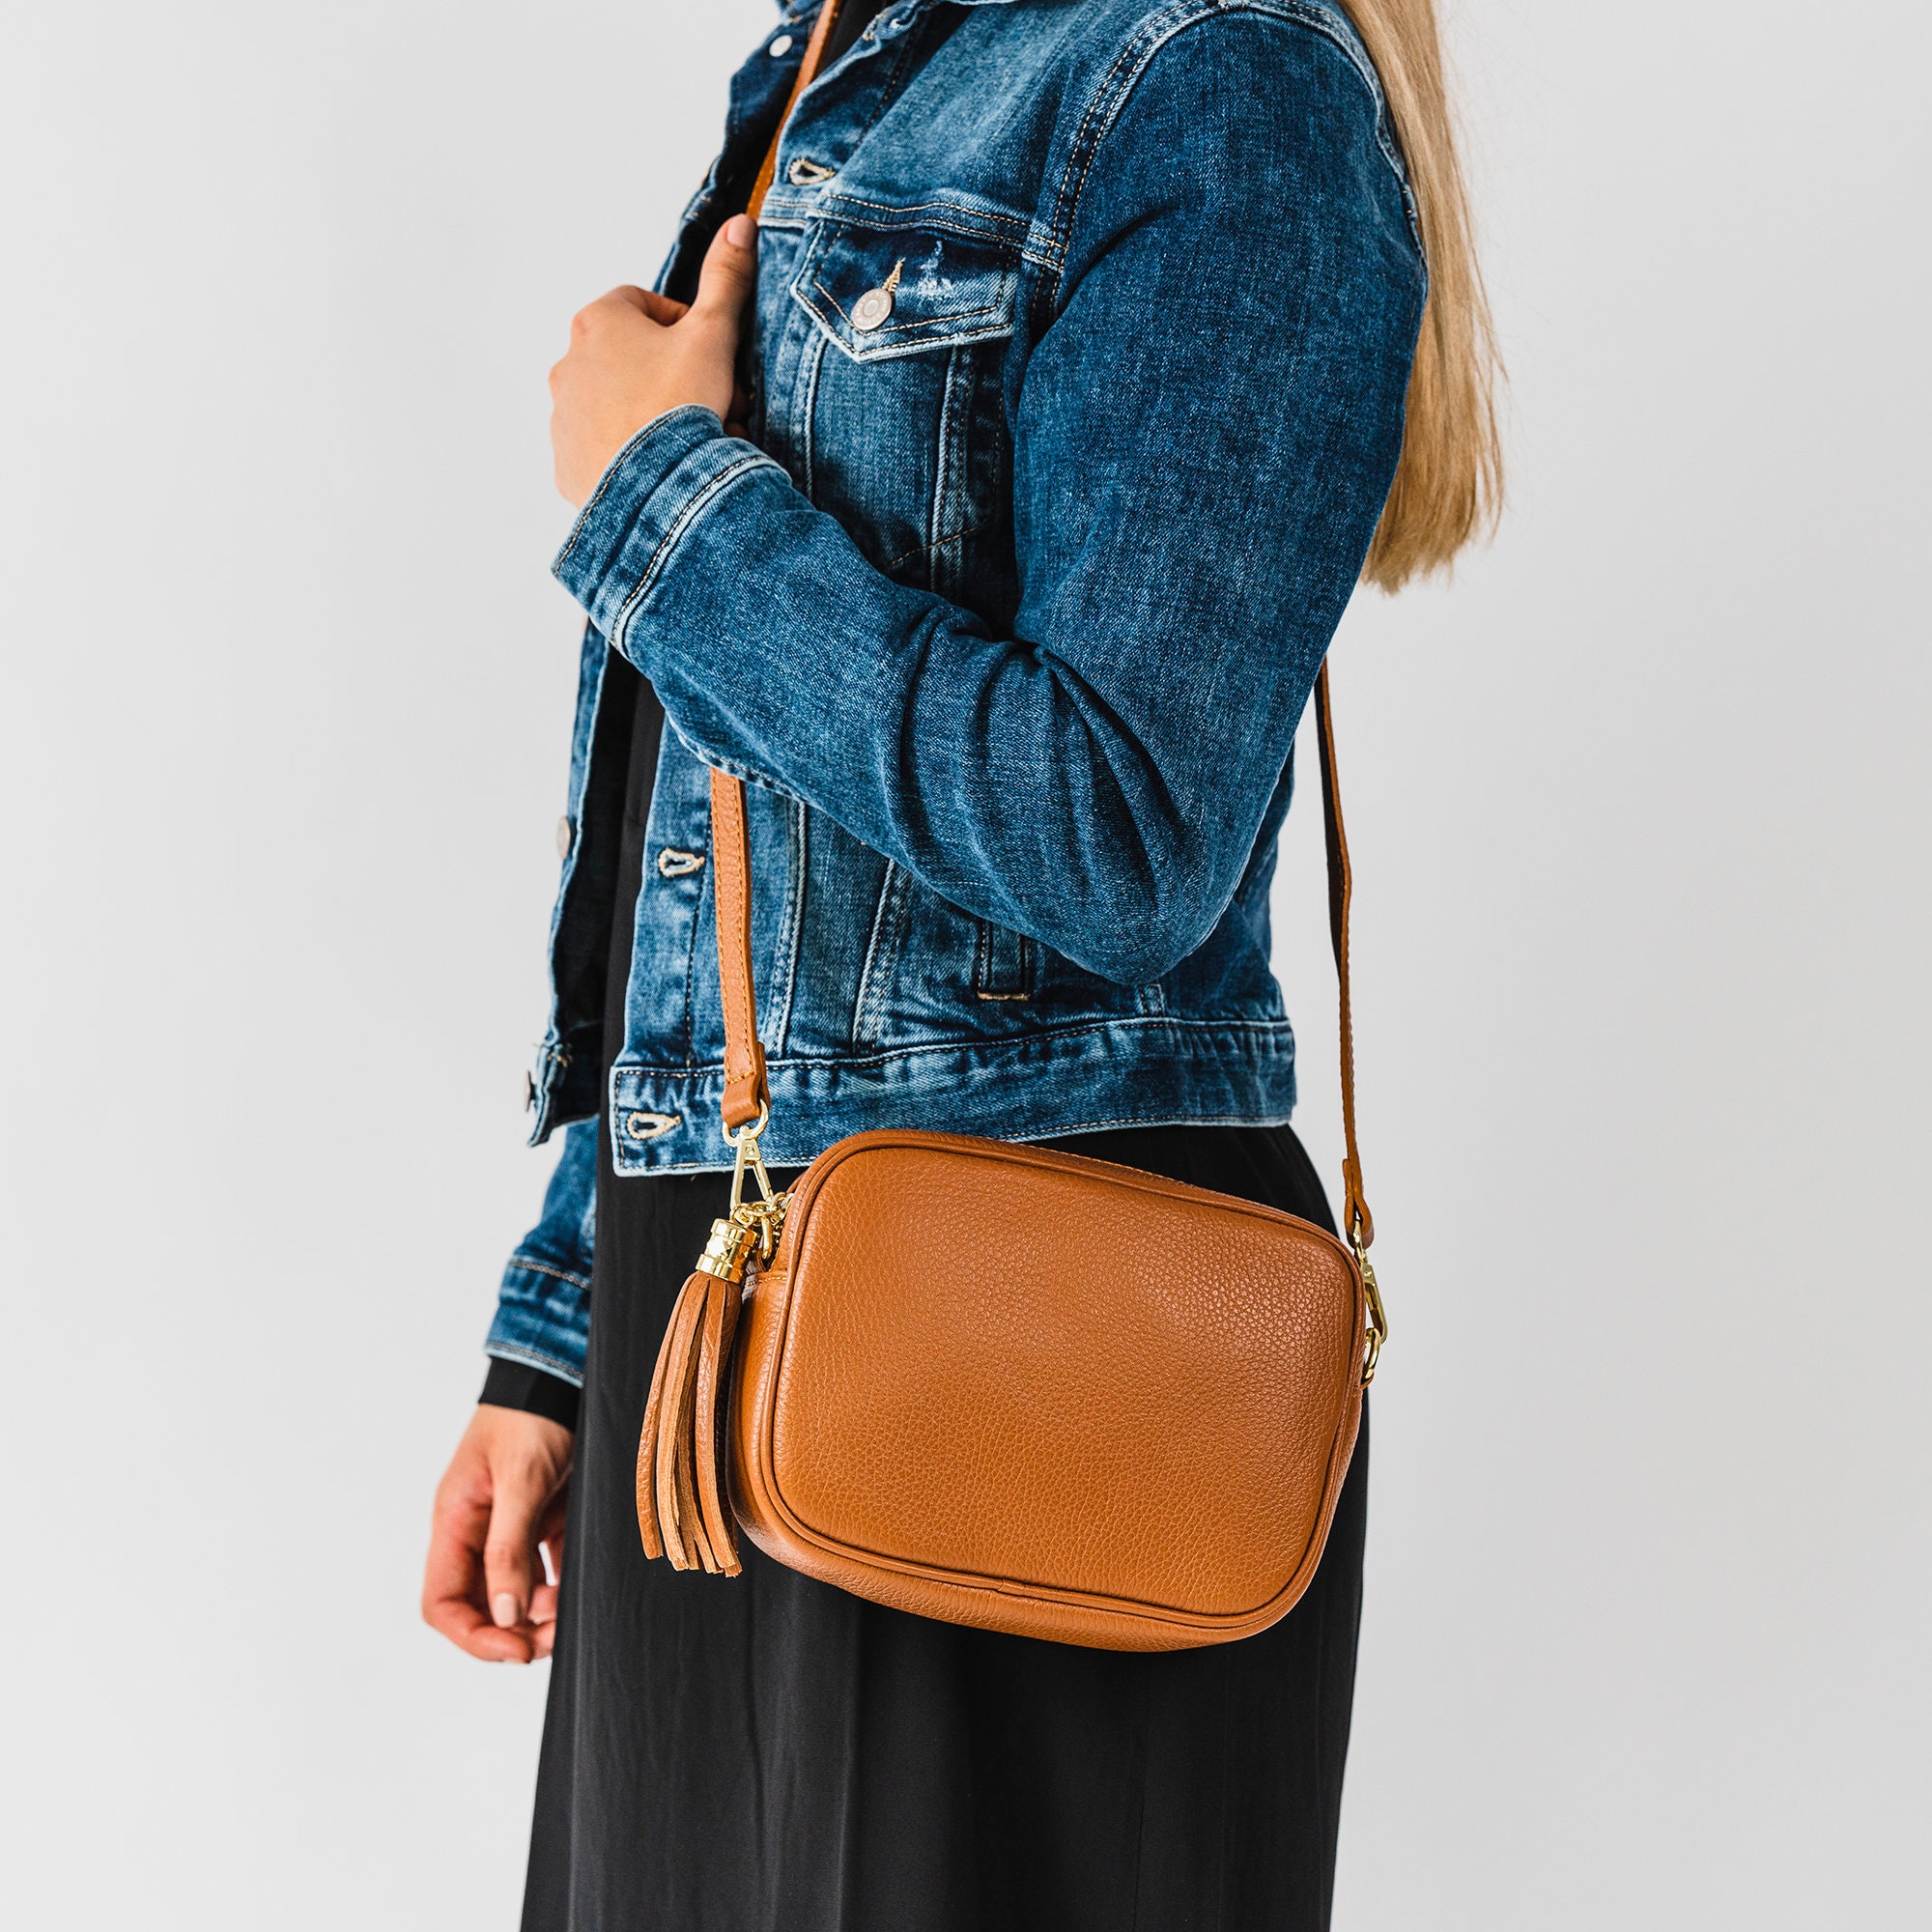 TRBSXRT Crossbody Bag for Women - Camera Crossbody Purse Leather